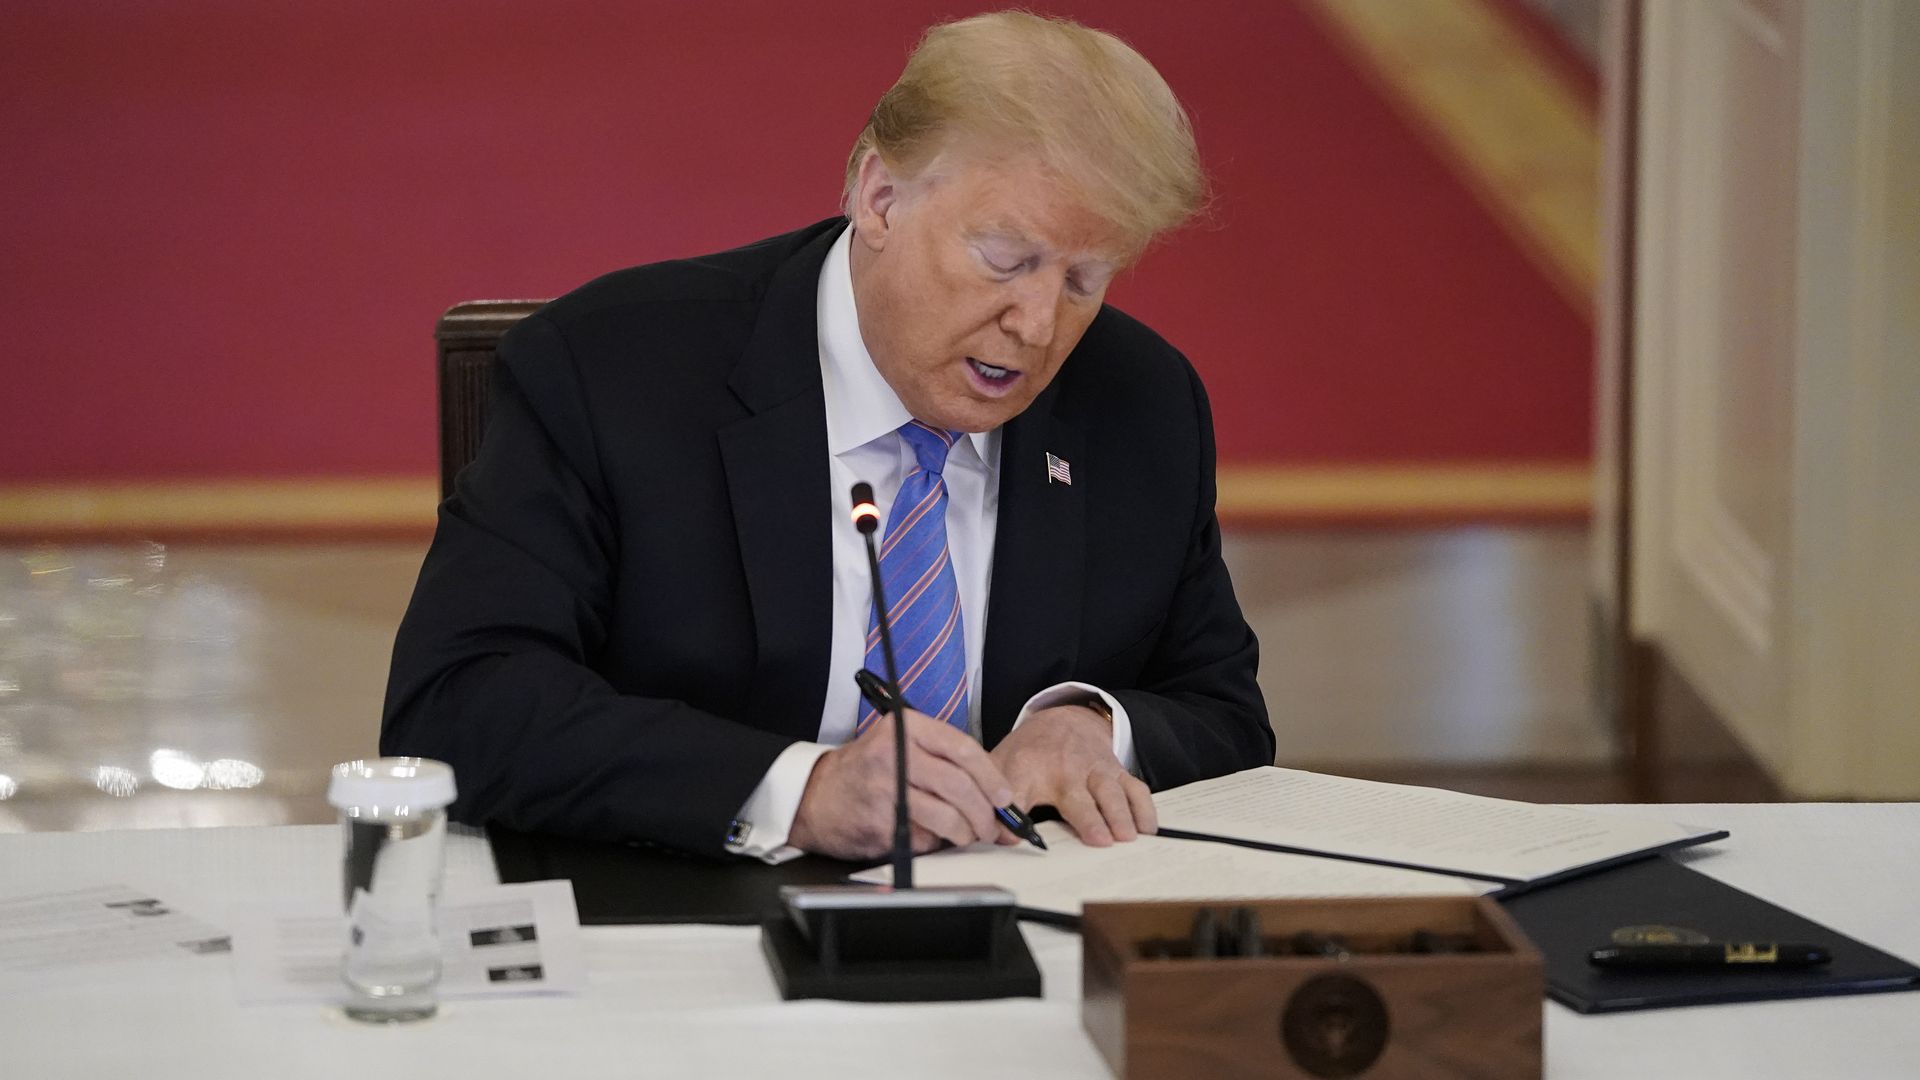 Trump signs an executive order 